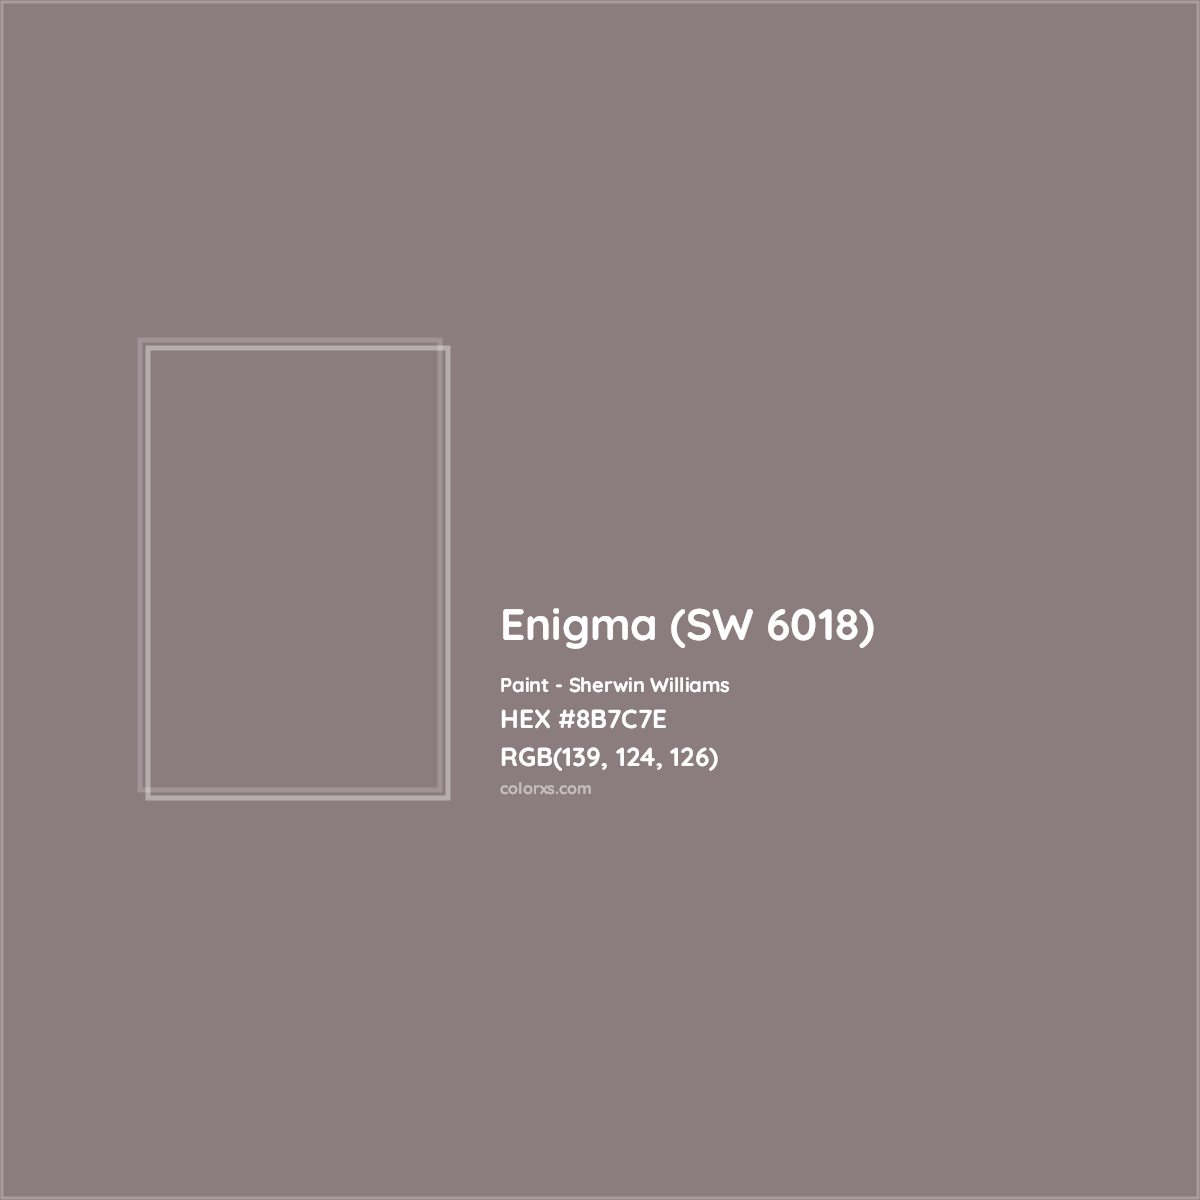 HEX #8B7C7E Enigma (SW 6018) Paint Sherwin Williams - Color Code